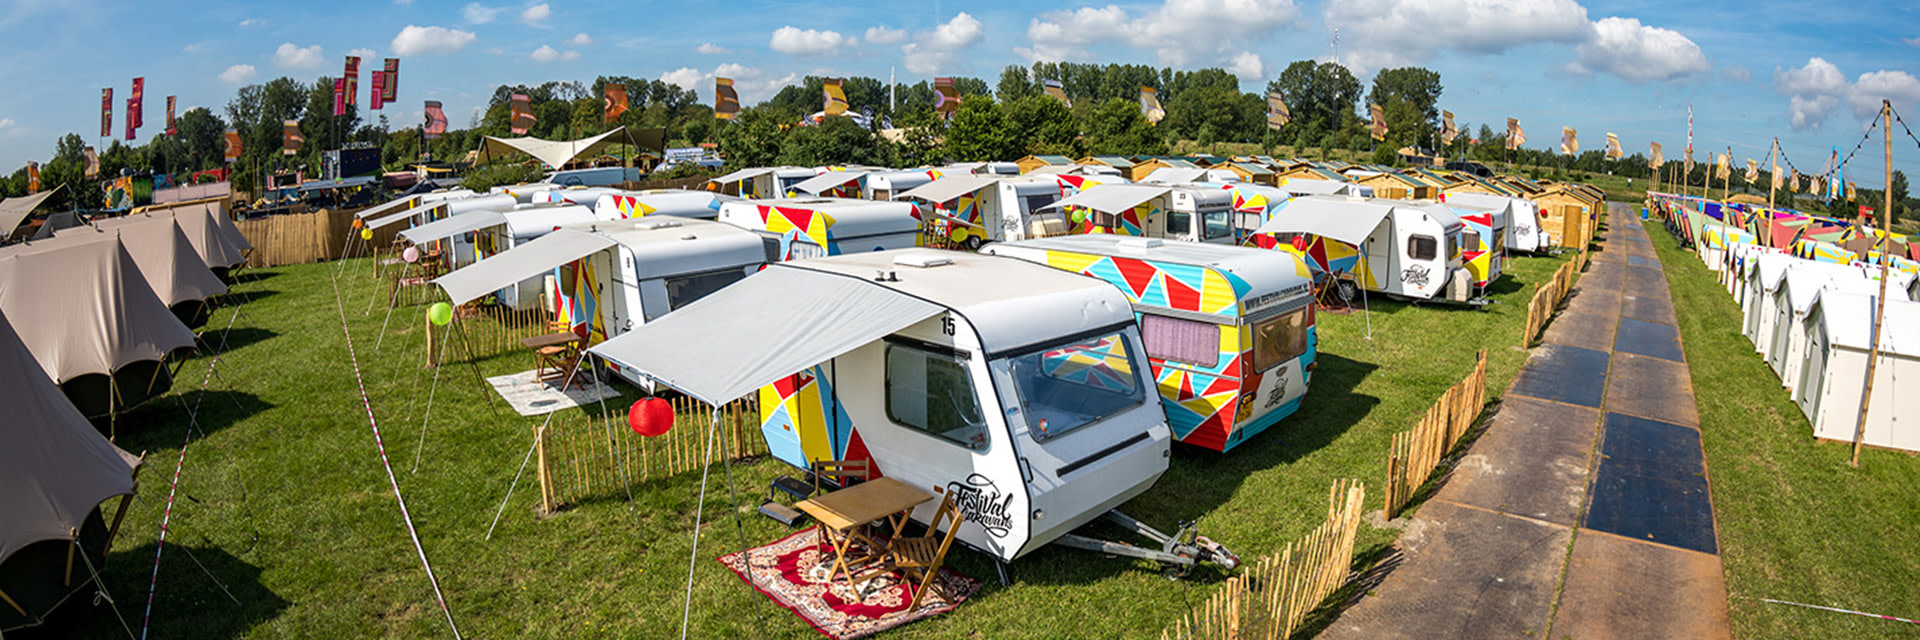 Camp at the Footscray Caravan and Camping Festival